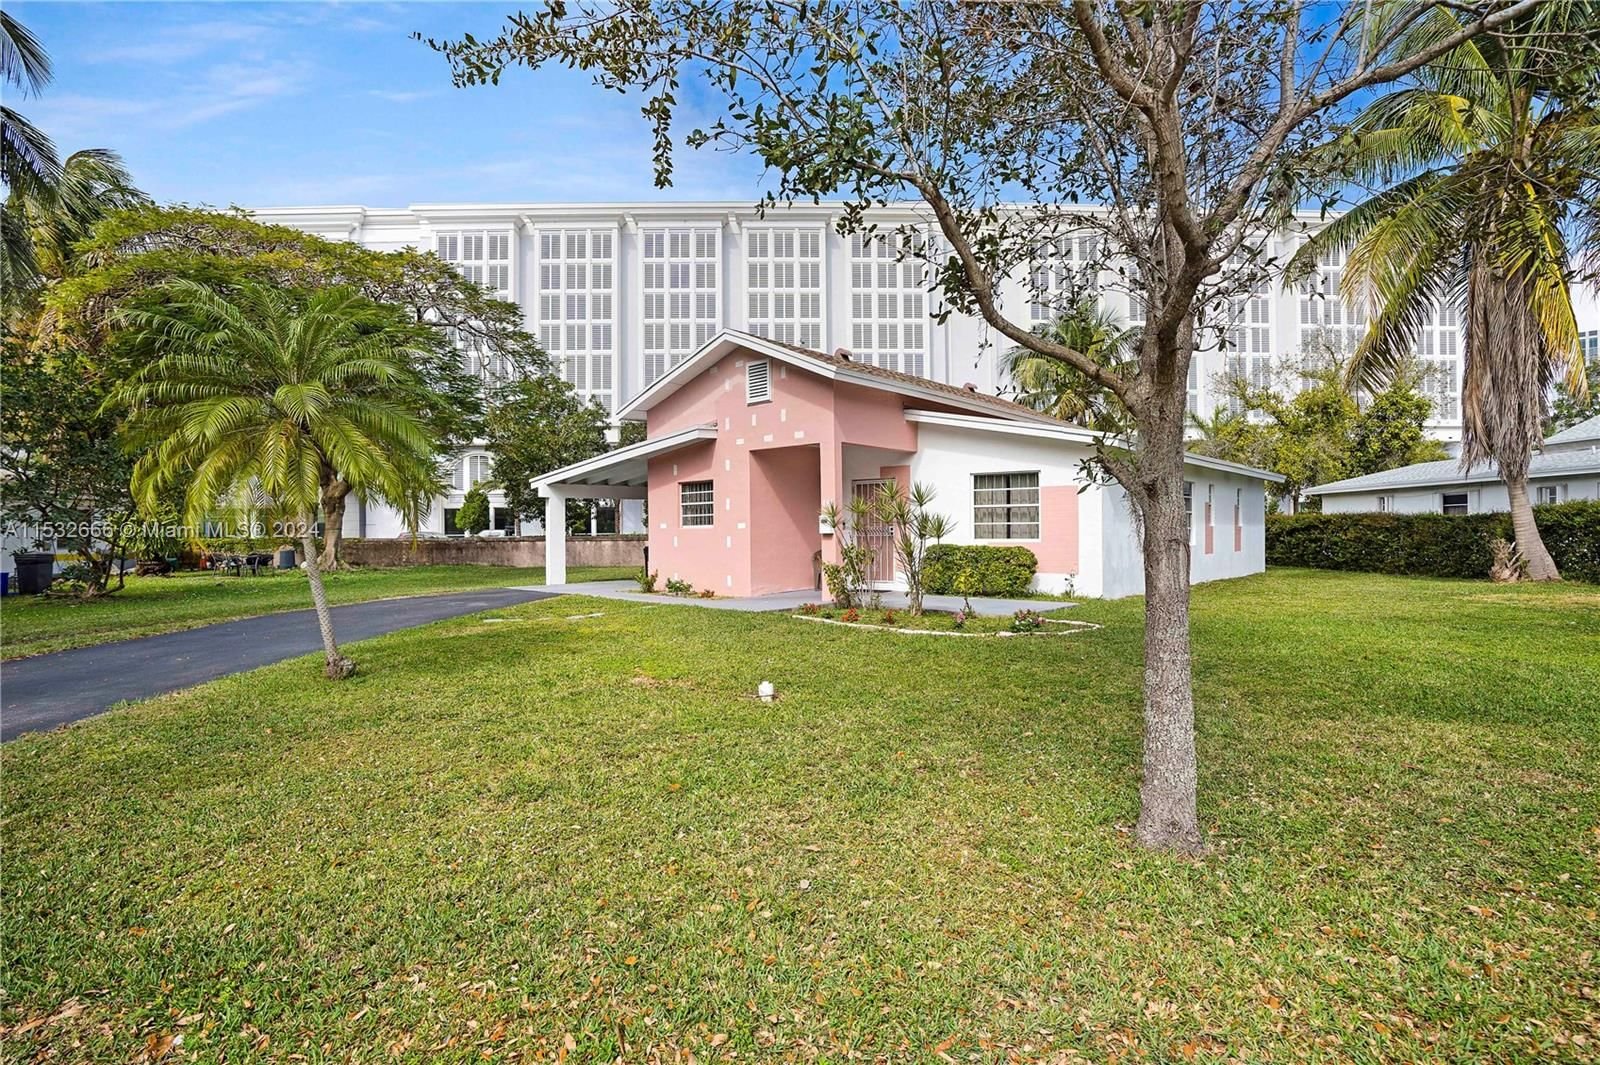 Real estate property located at 135 George Allen Ave, Miami-Dade County, ASA WASHINGTON SMITH SUB, Coral Gables, FL